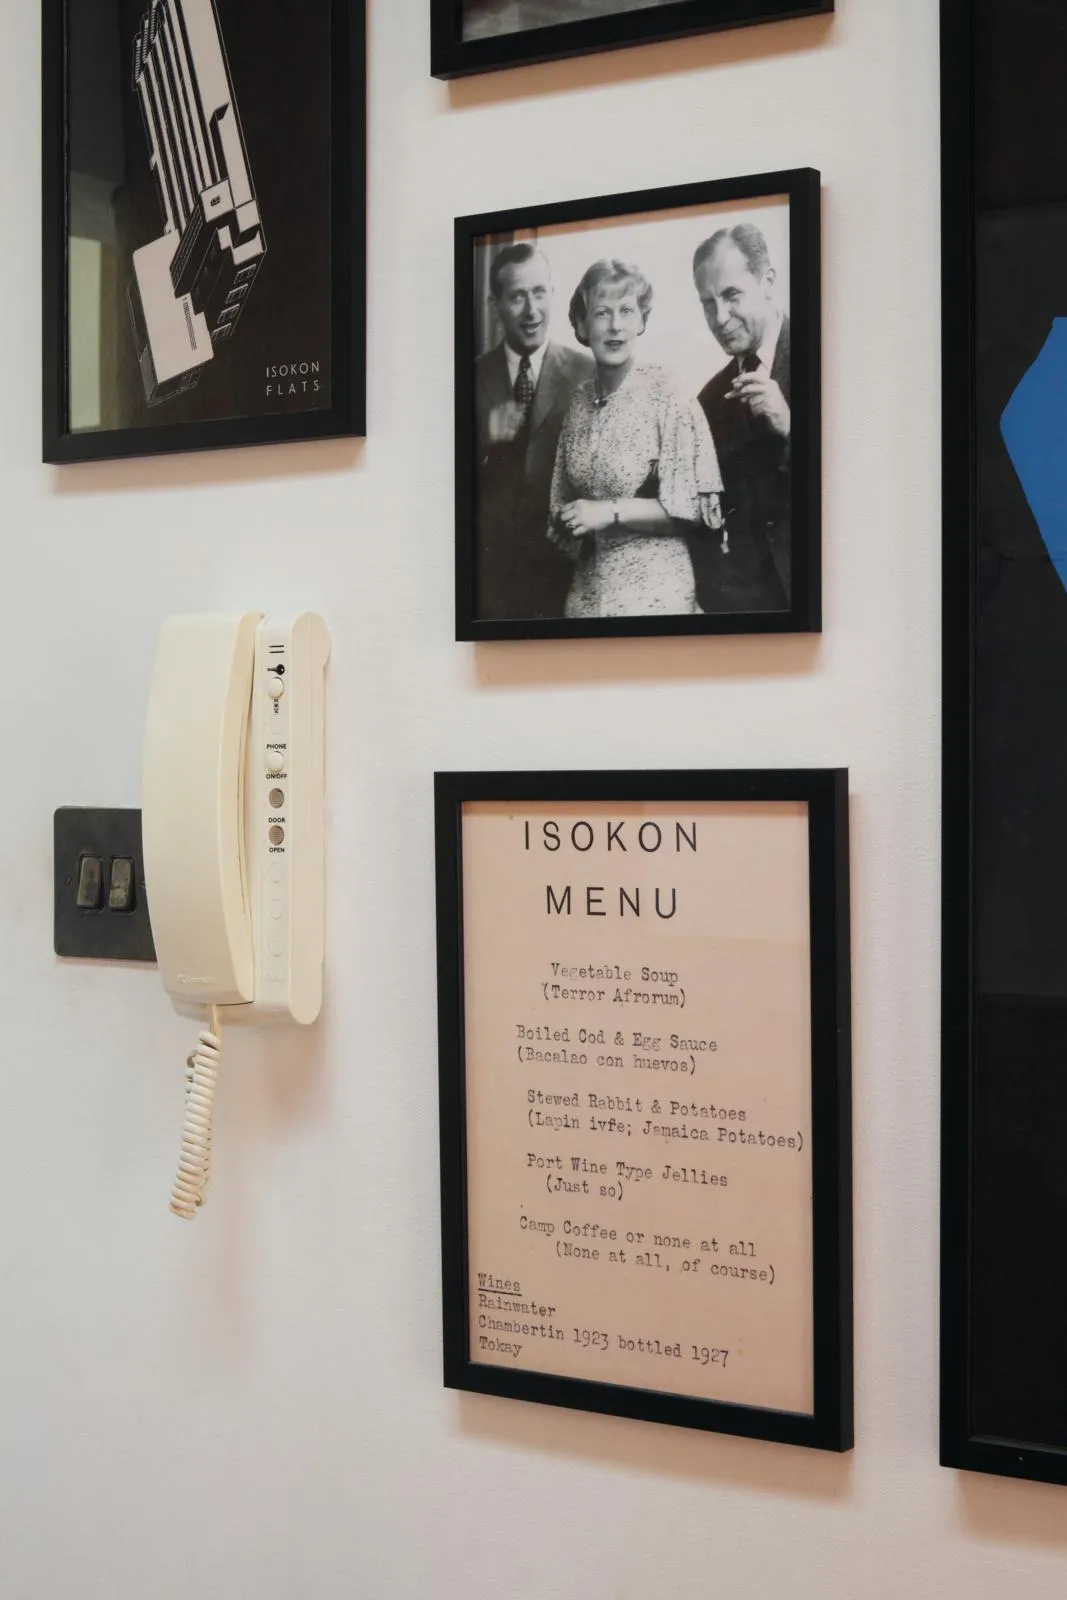 The Isokon Hallway with Isokon memorabilia